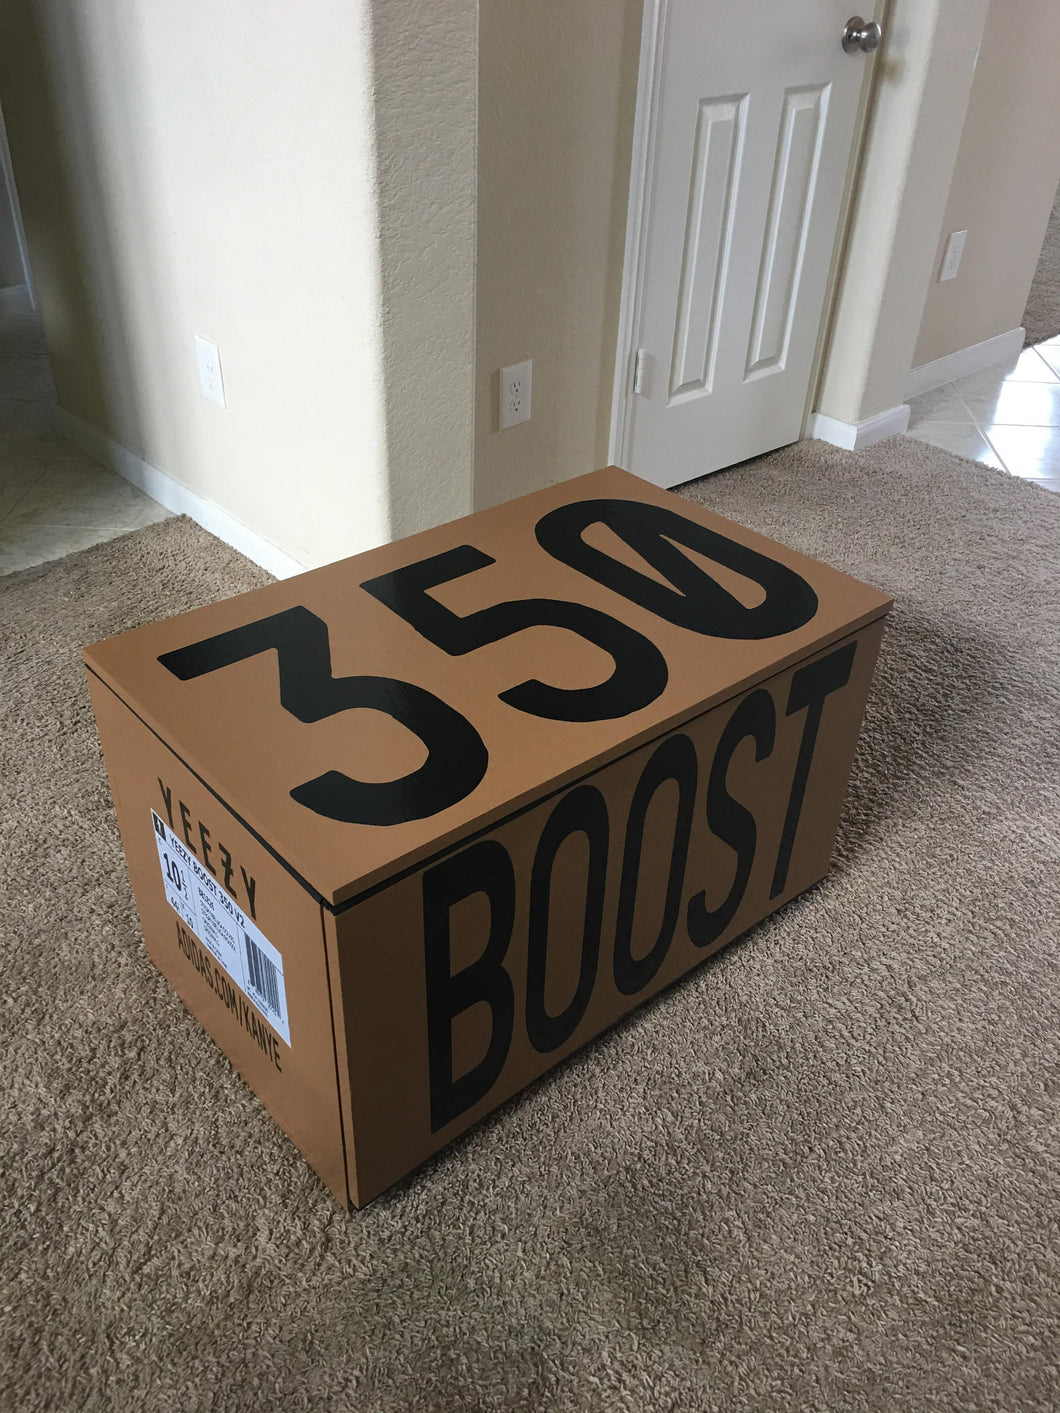 yeezy boost shoe box